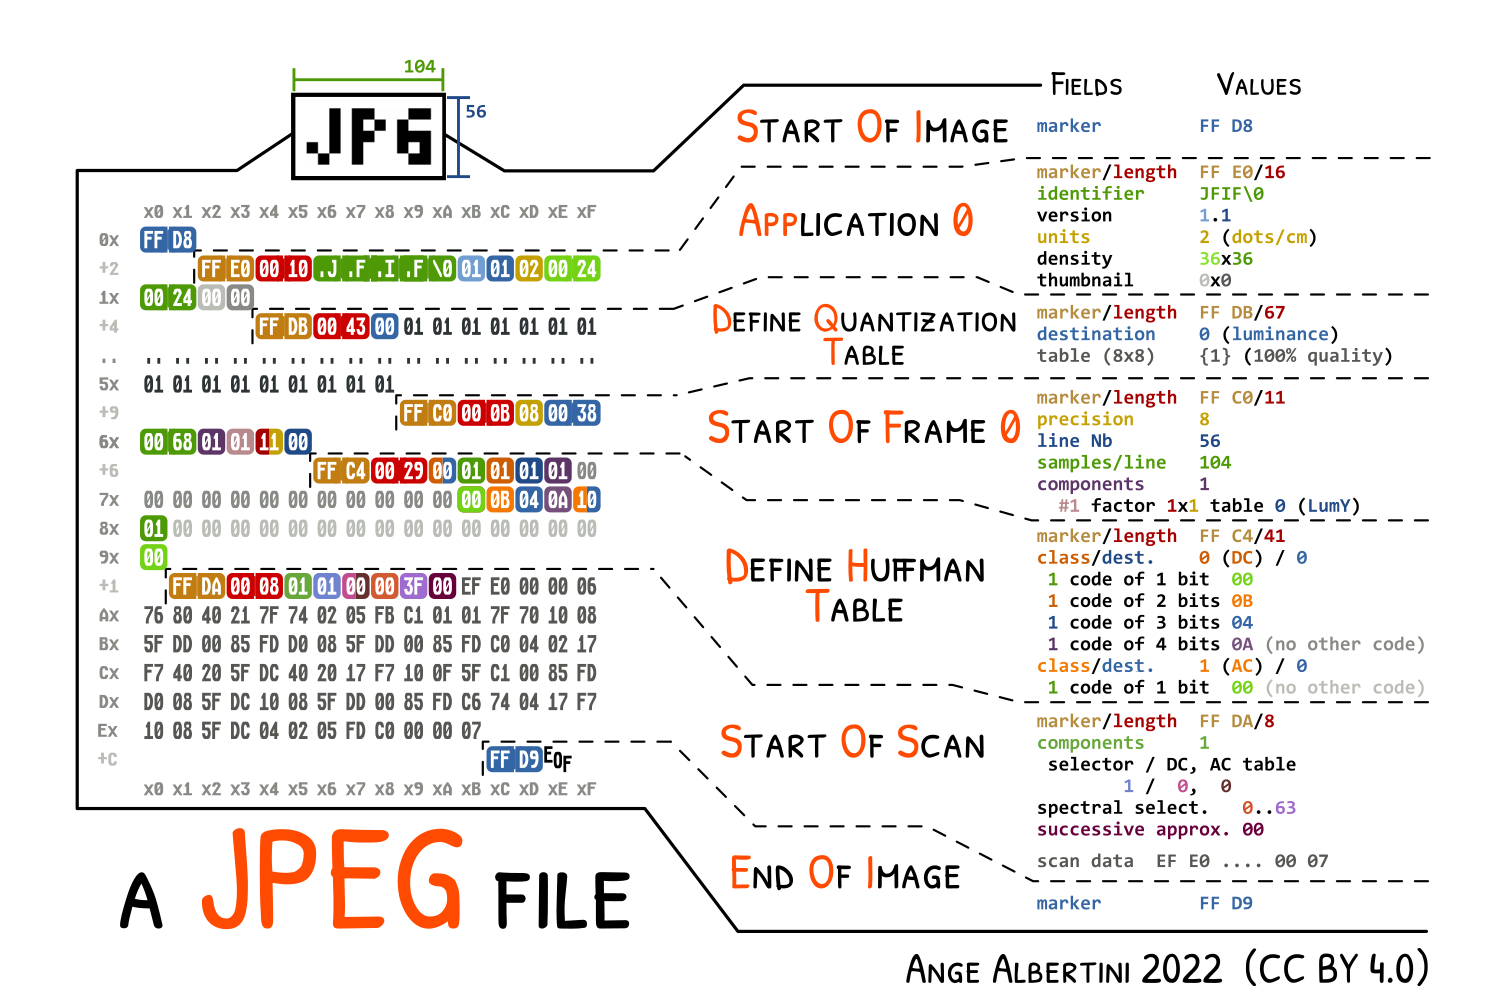 a JPG file